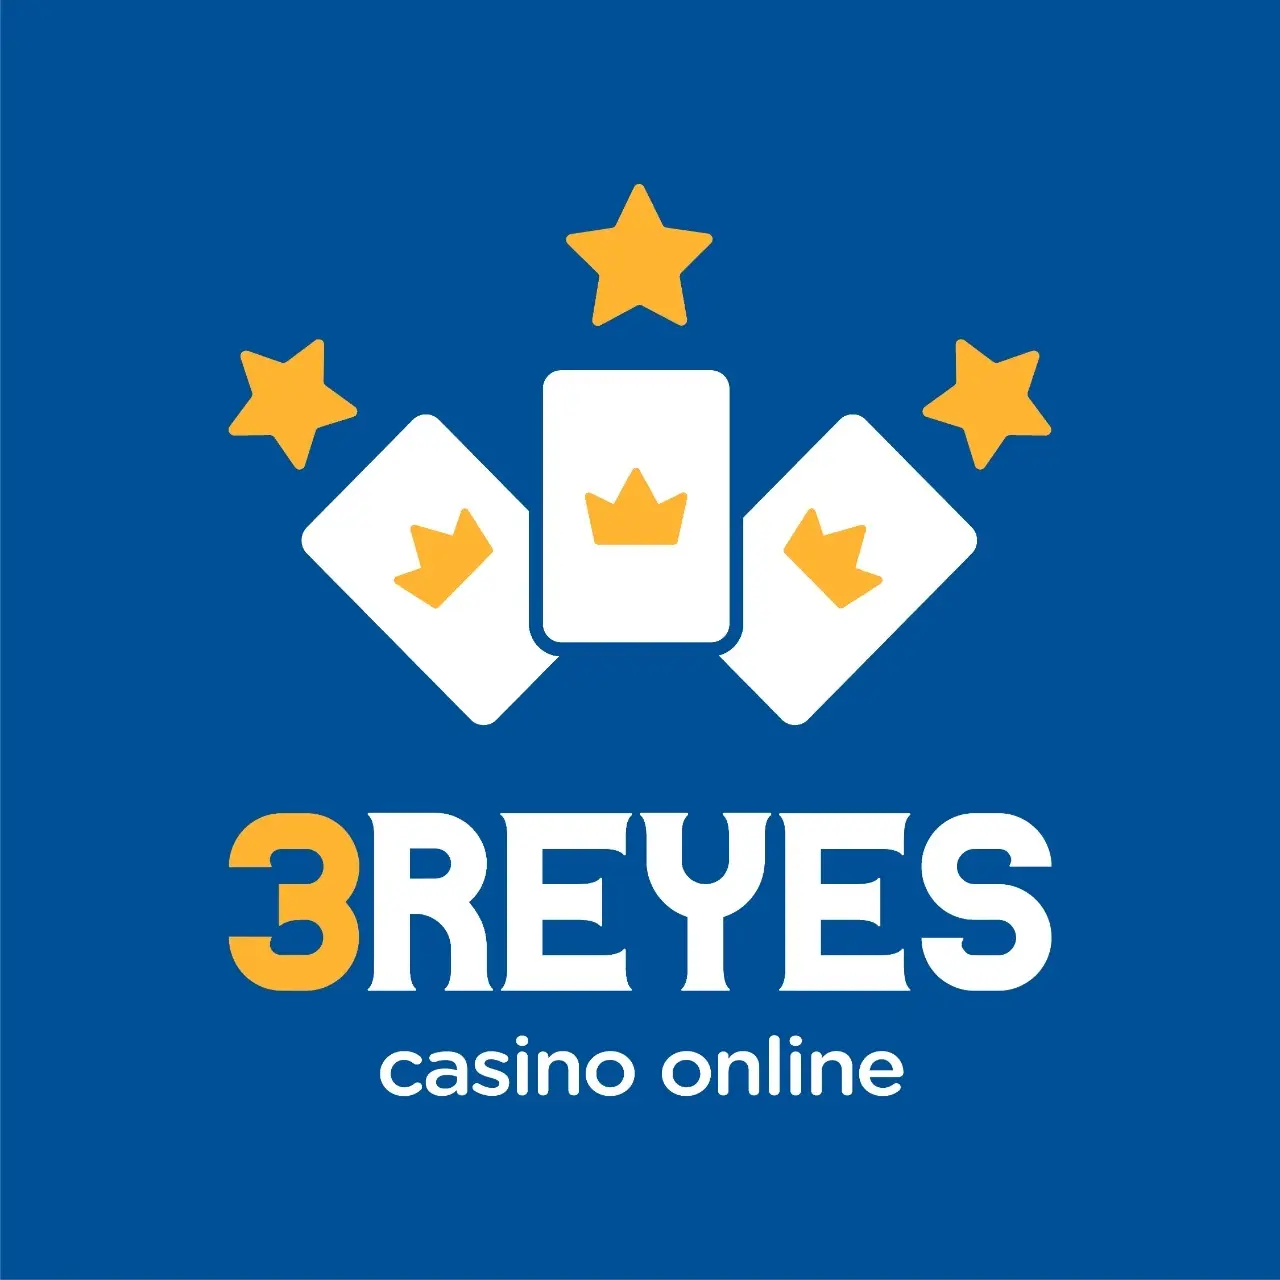 3 Reyes casino